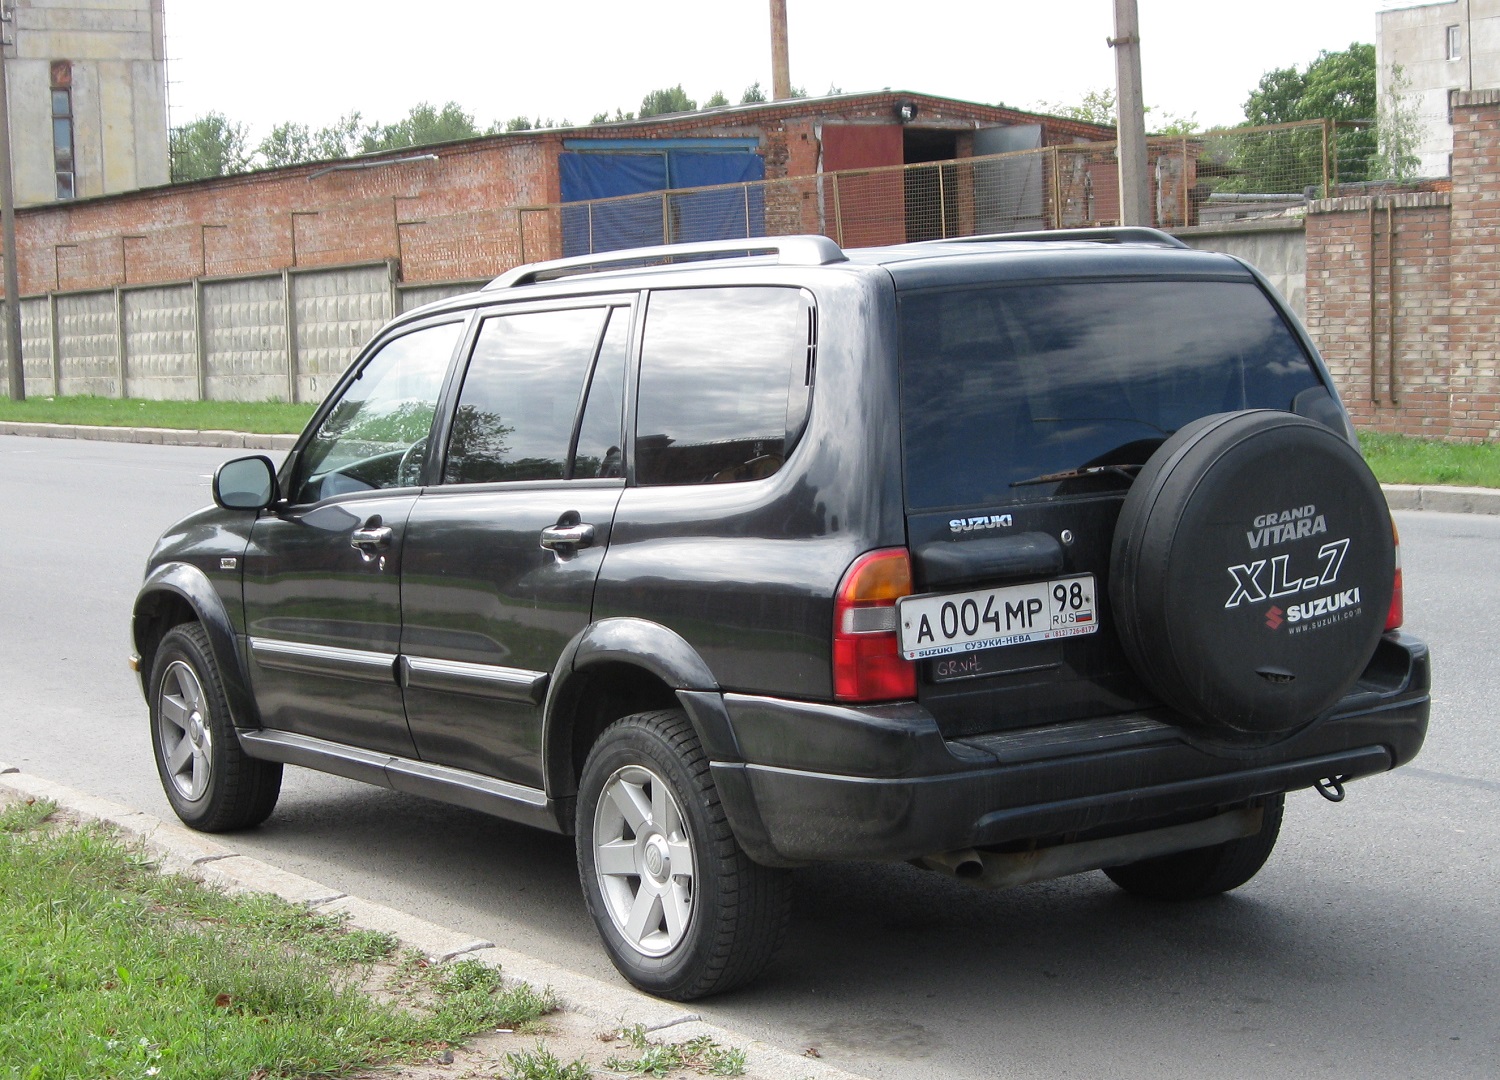 Vitara xl7. Suzuki Grand Vitara XL-7. Suzuki Vitara xl7. Гранд Витара xl7. Suzuki Grand Vitara XL-7 2003.